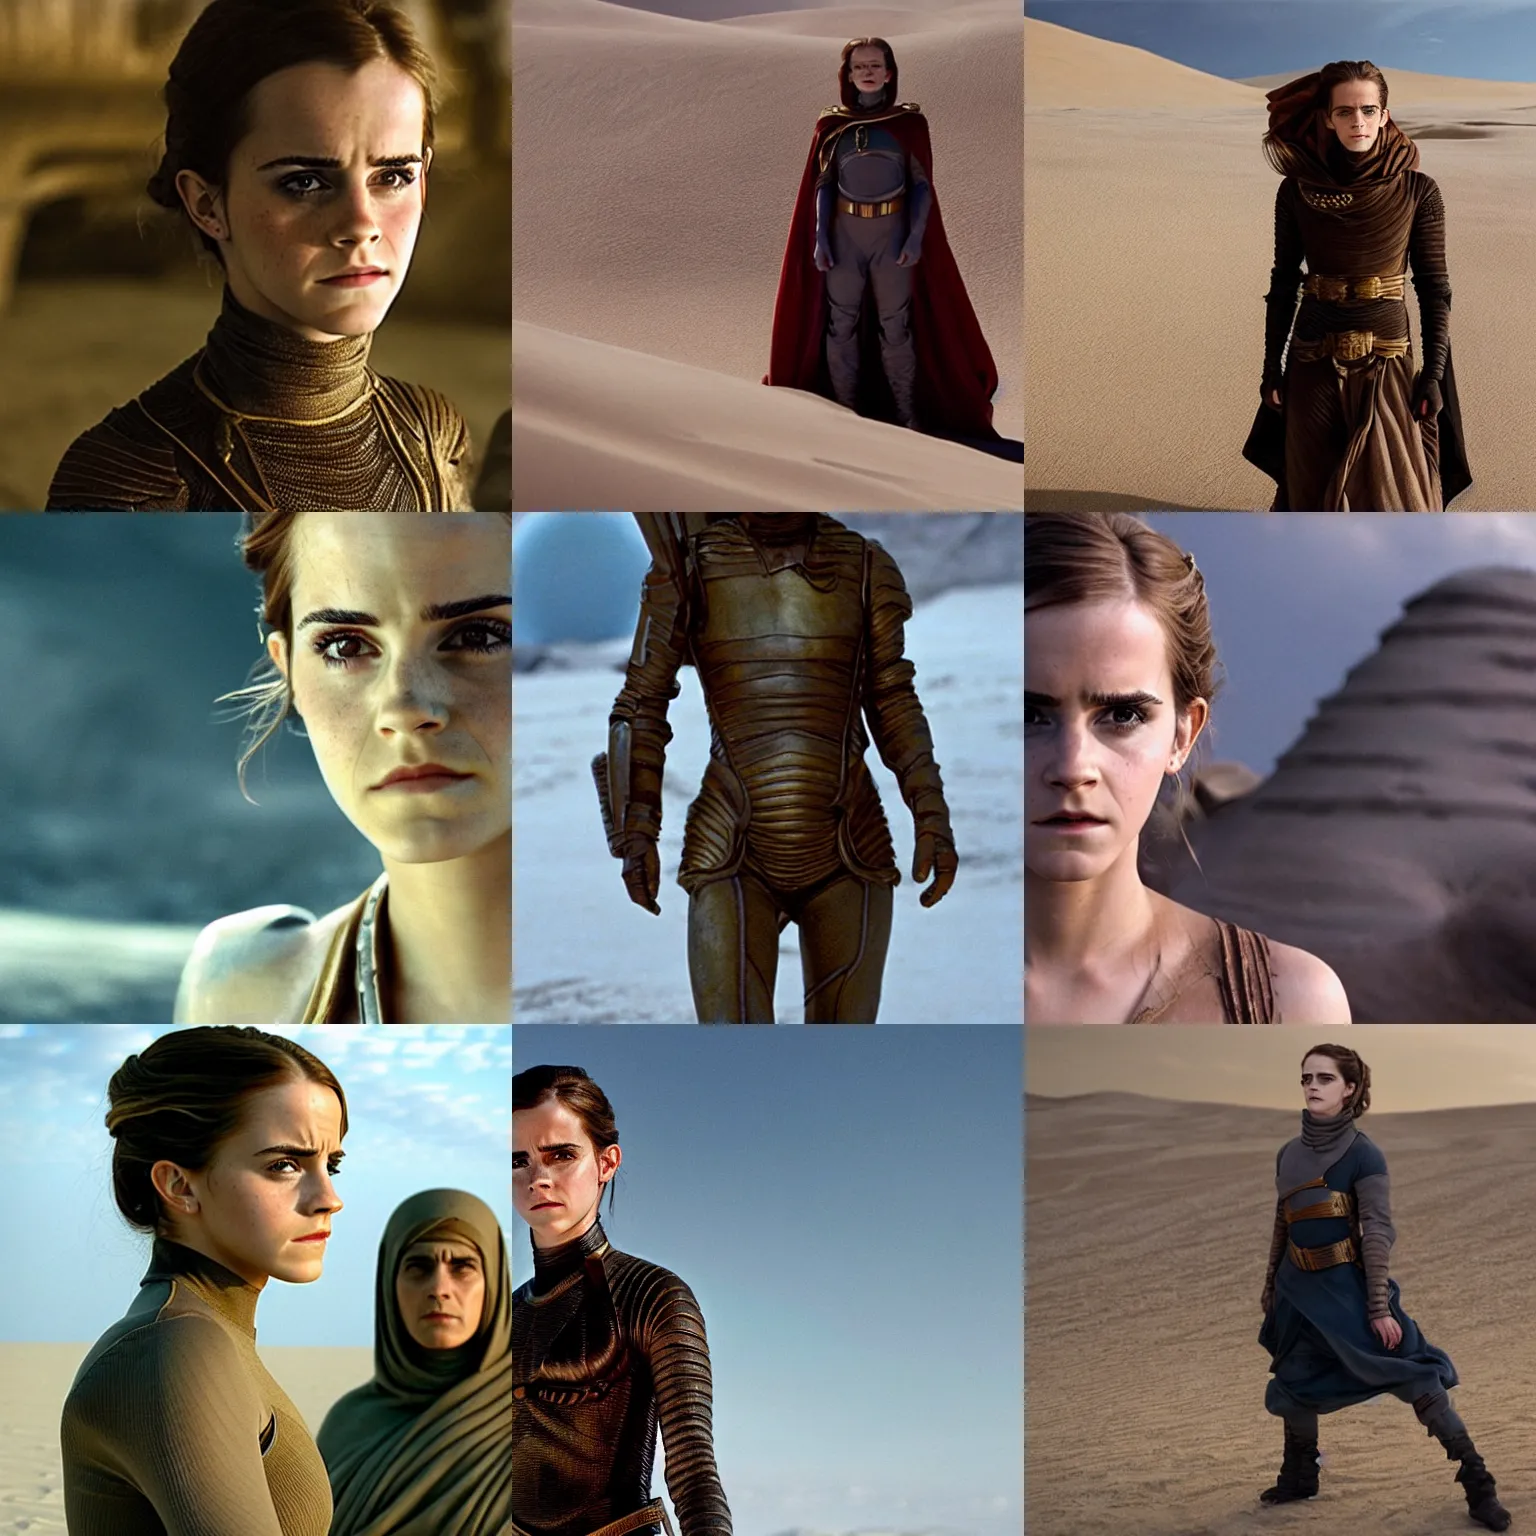 Prompt: Movie still of Emma Watson in Dune